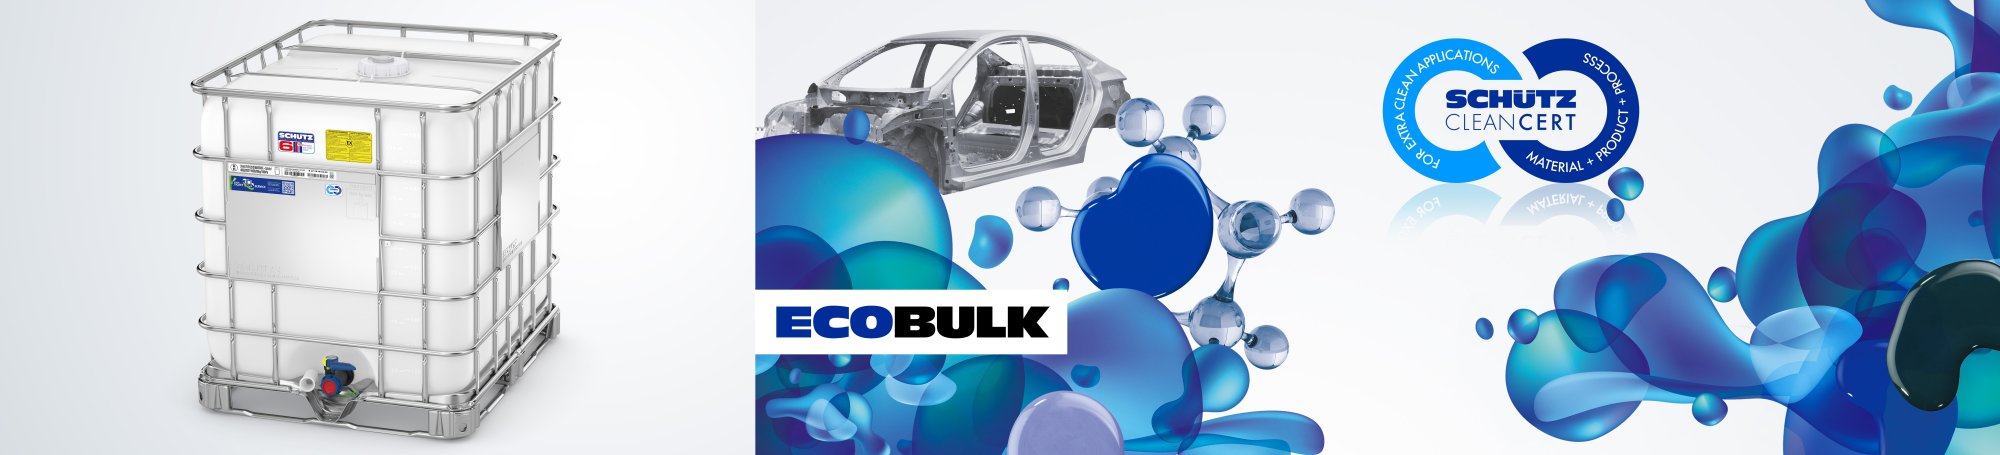 ECOBULK MX-EX-EV CLEANCERT